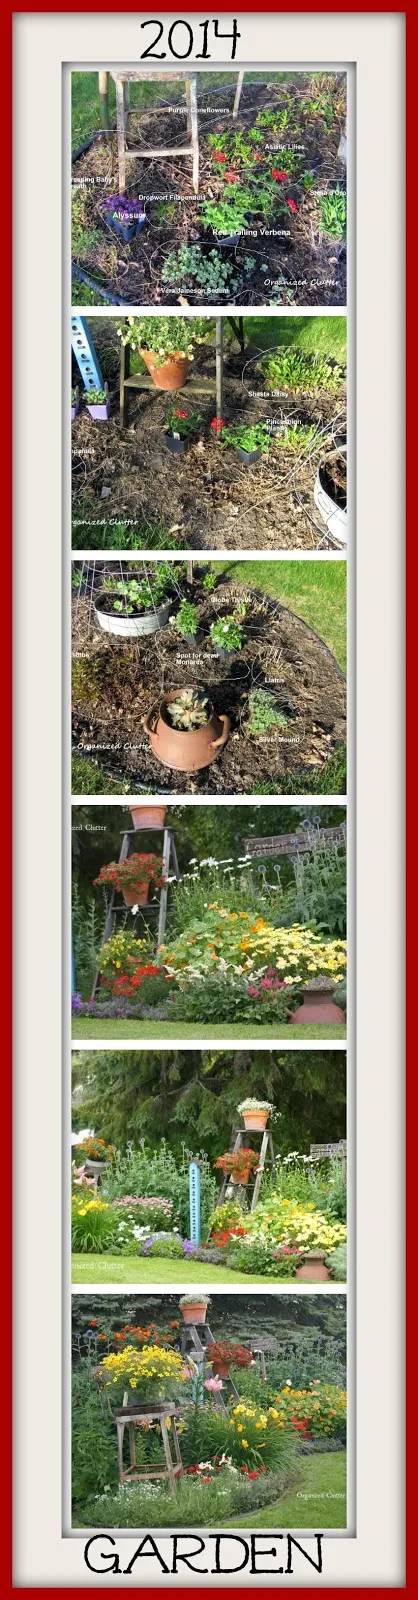 My 2014 Garden Planning, Planting & After Photos www.organizedclutter.net